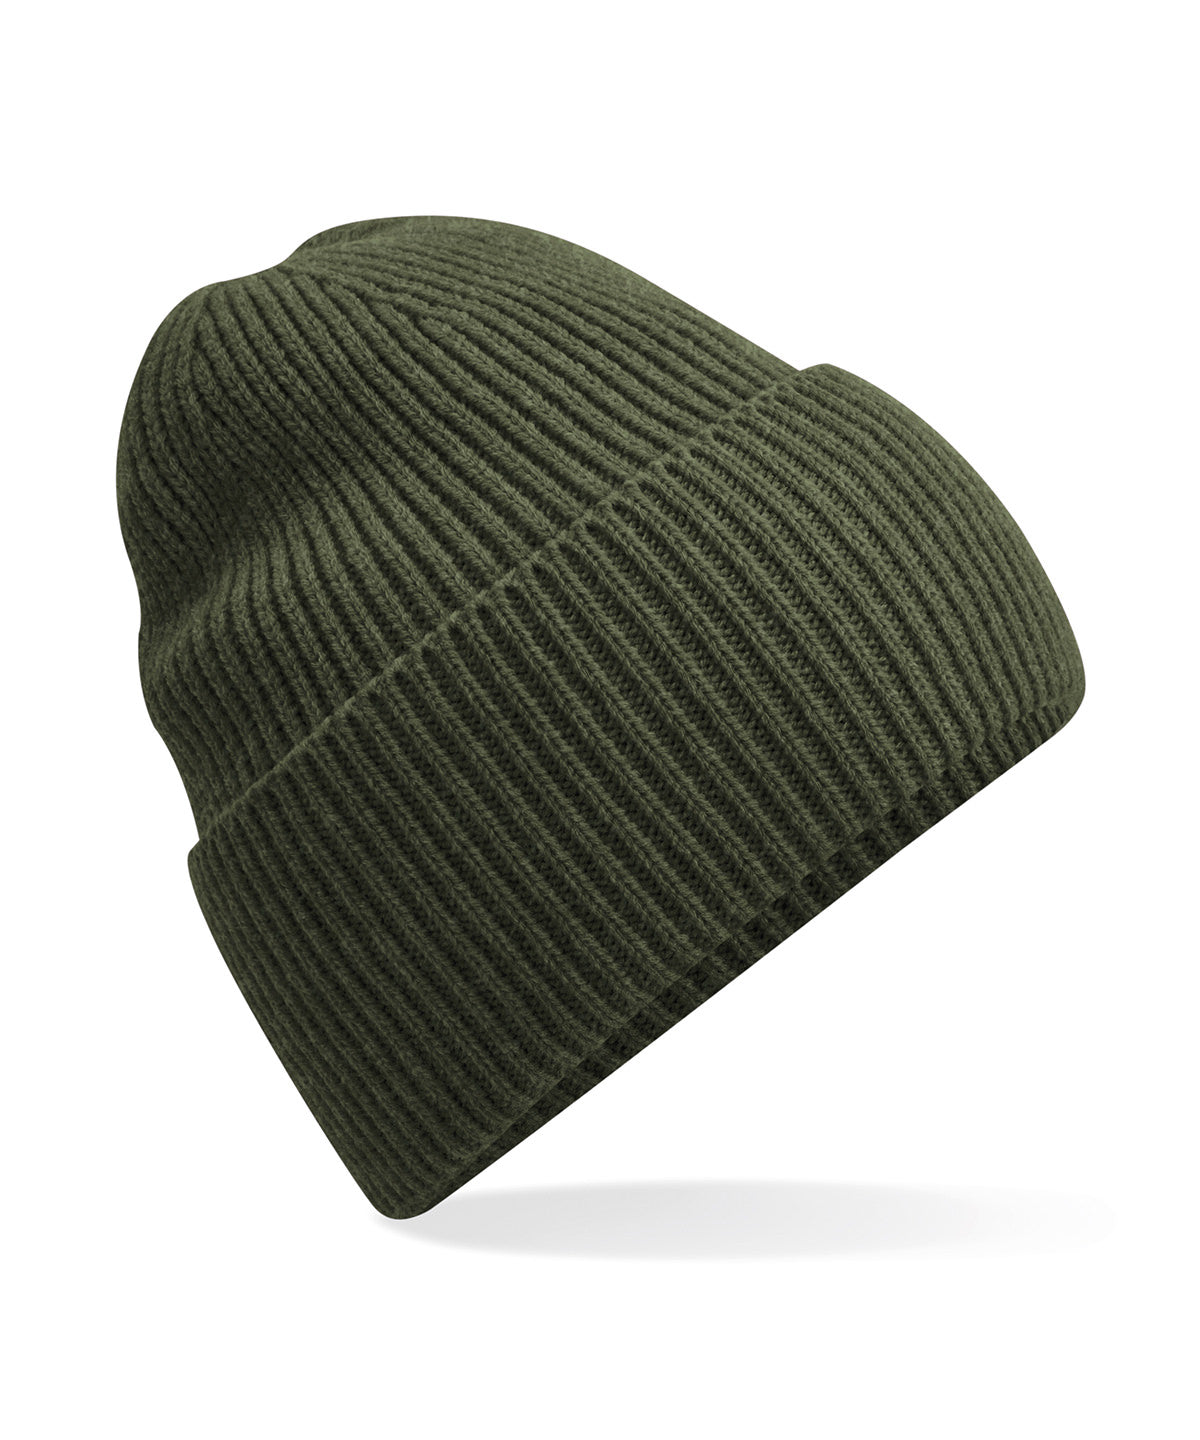 Personalised Hats - Navy Beechfield Oversized cuffed beanie